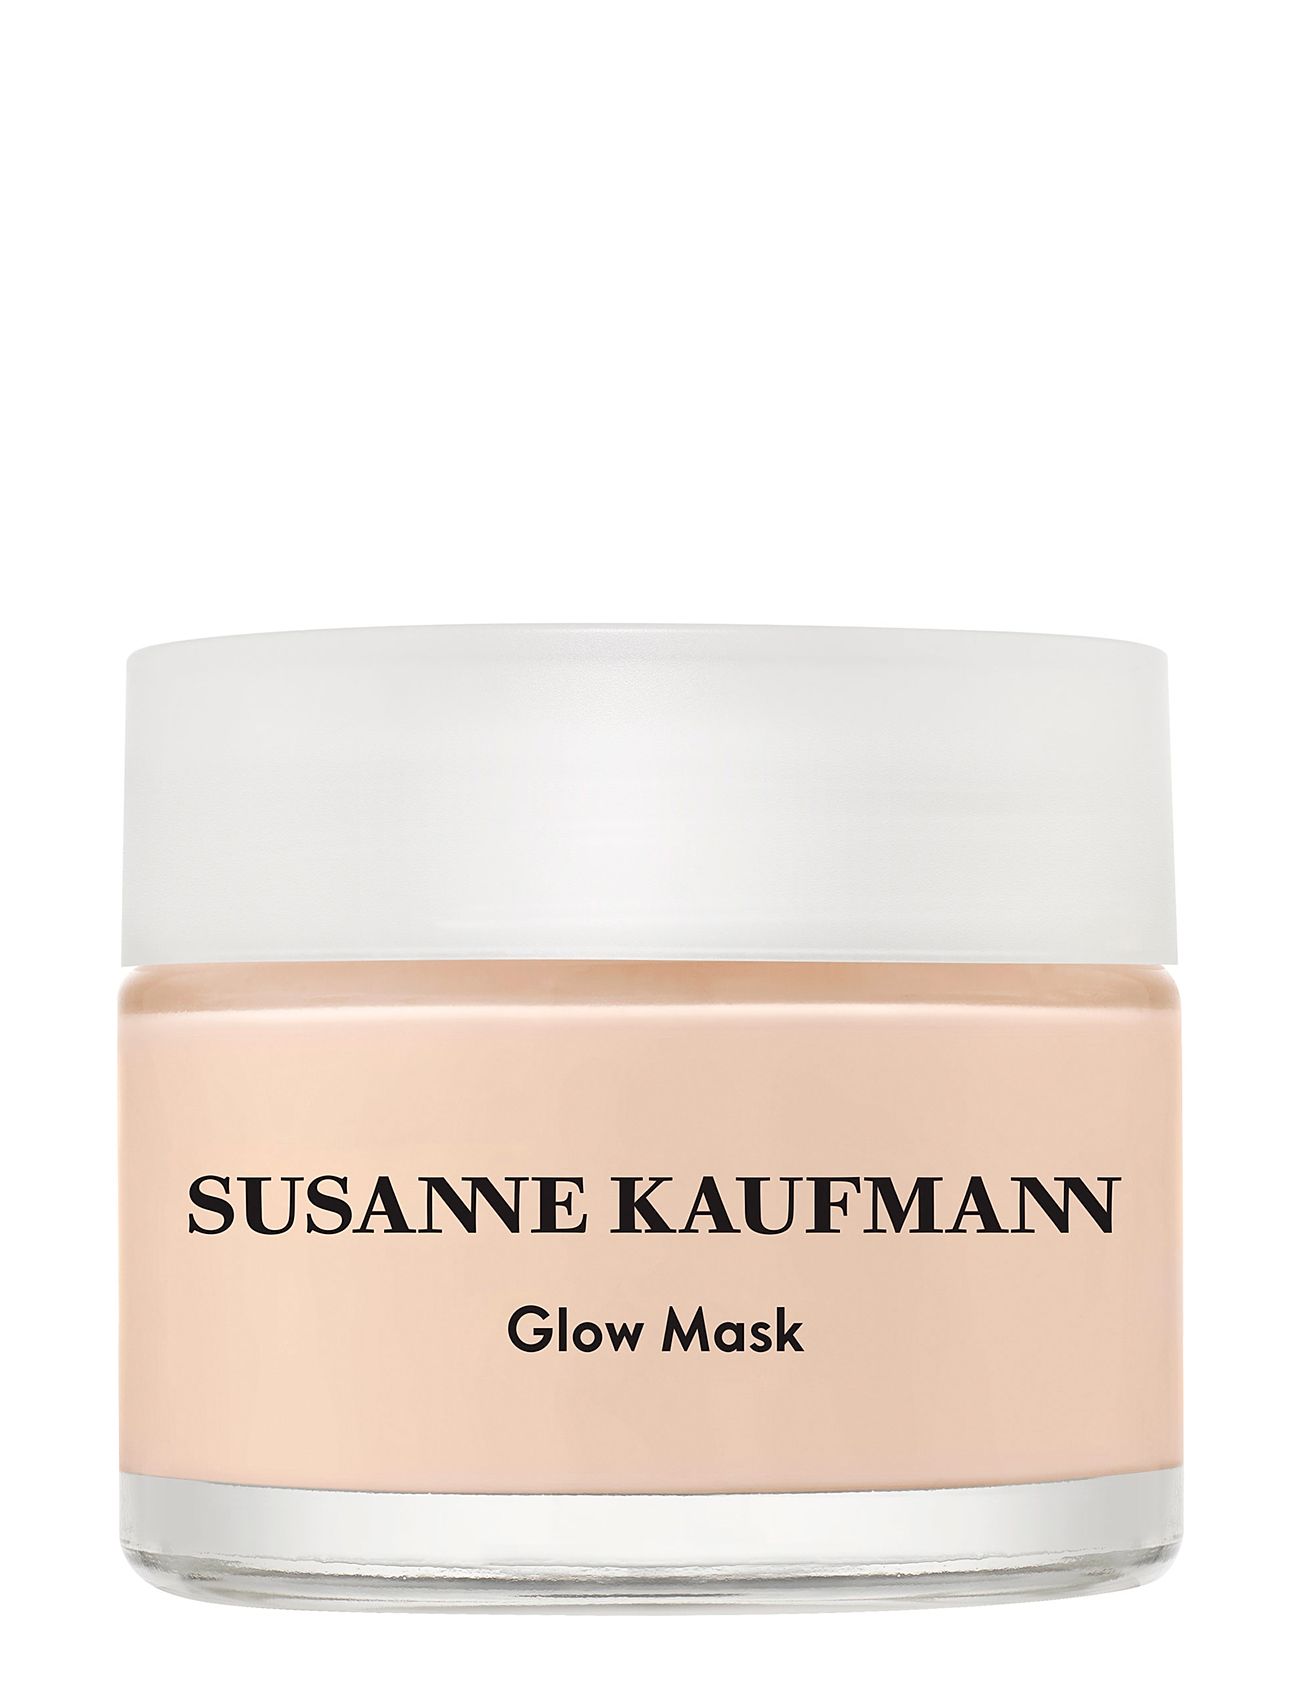 Glow Mask 50 Ml Beauty Women Skin Care Face Face Masks Detox Mask Nude Susanne Kaufman